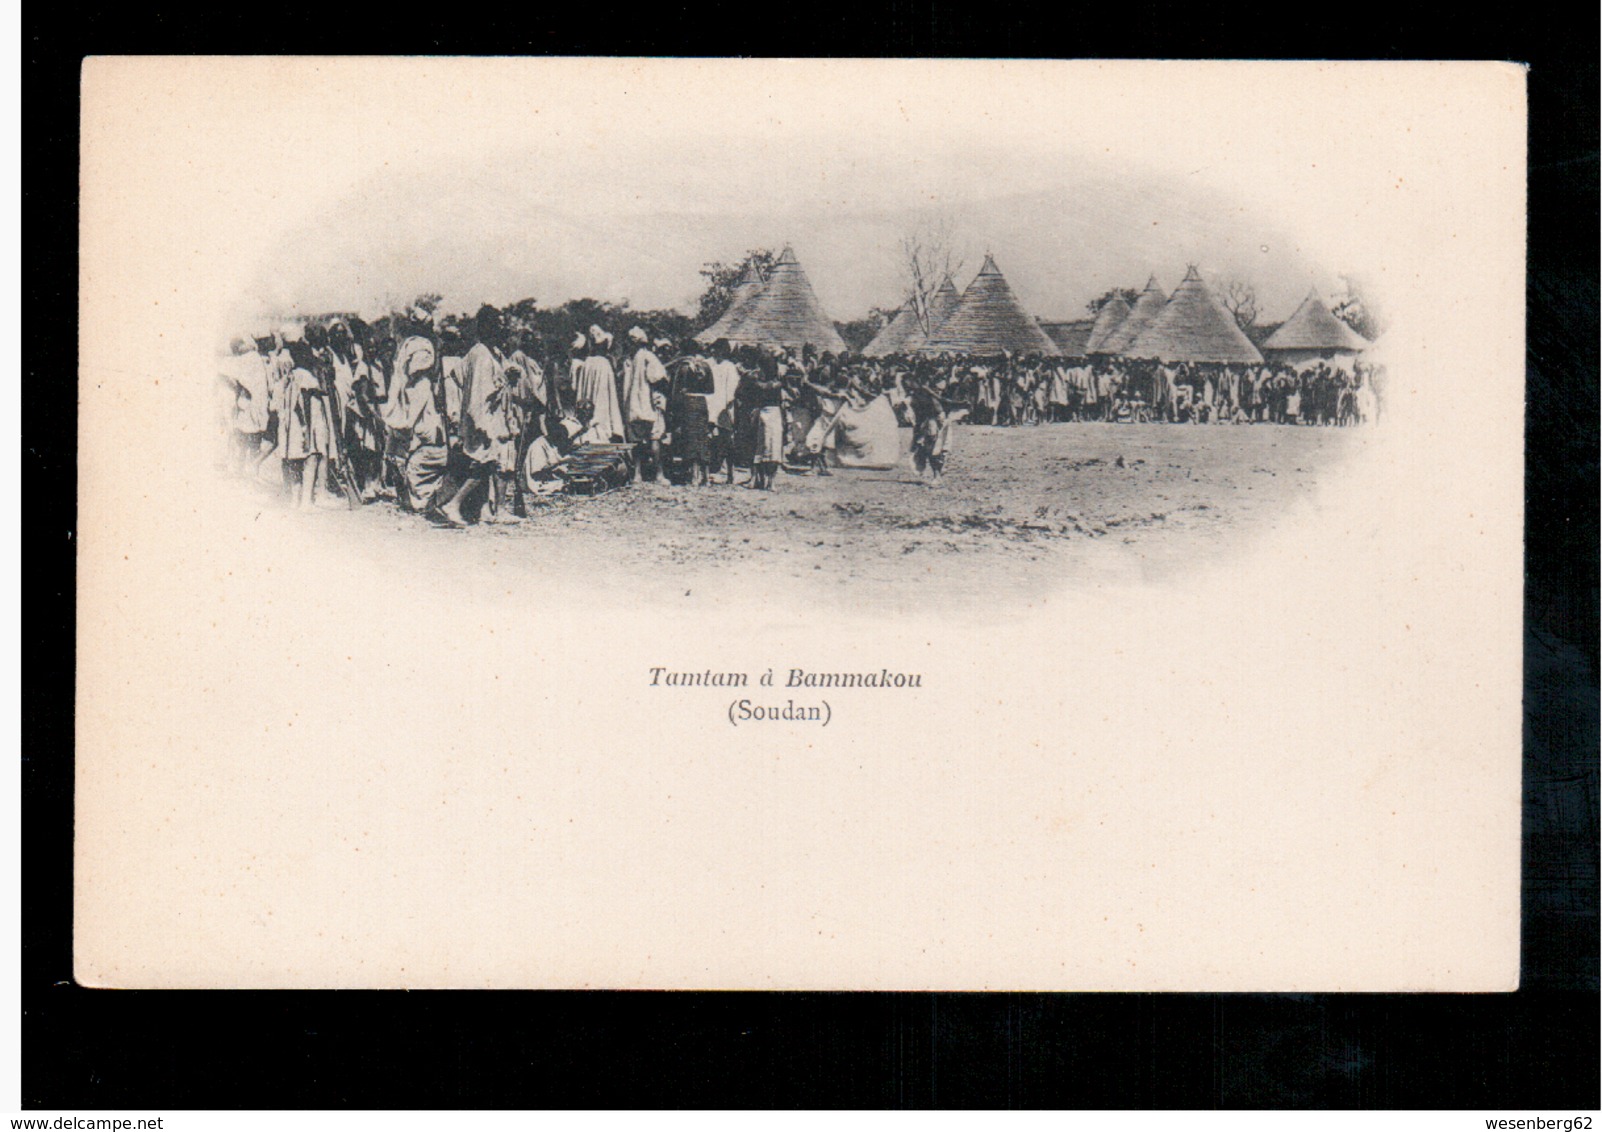 SOUDAN Tamtam à Bammakou Ca 1900 Old Postcard - Sudan